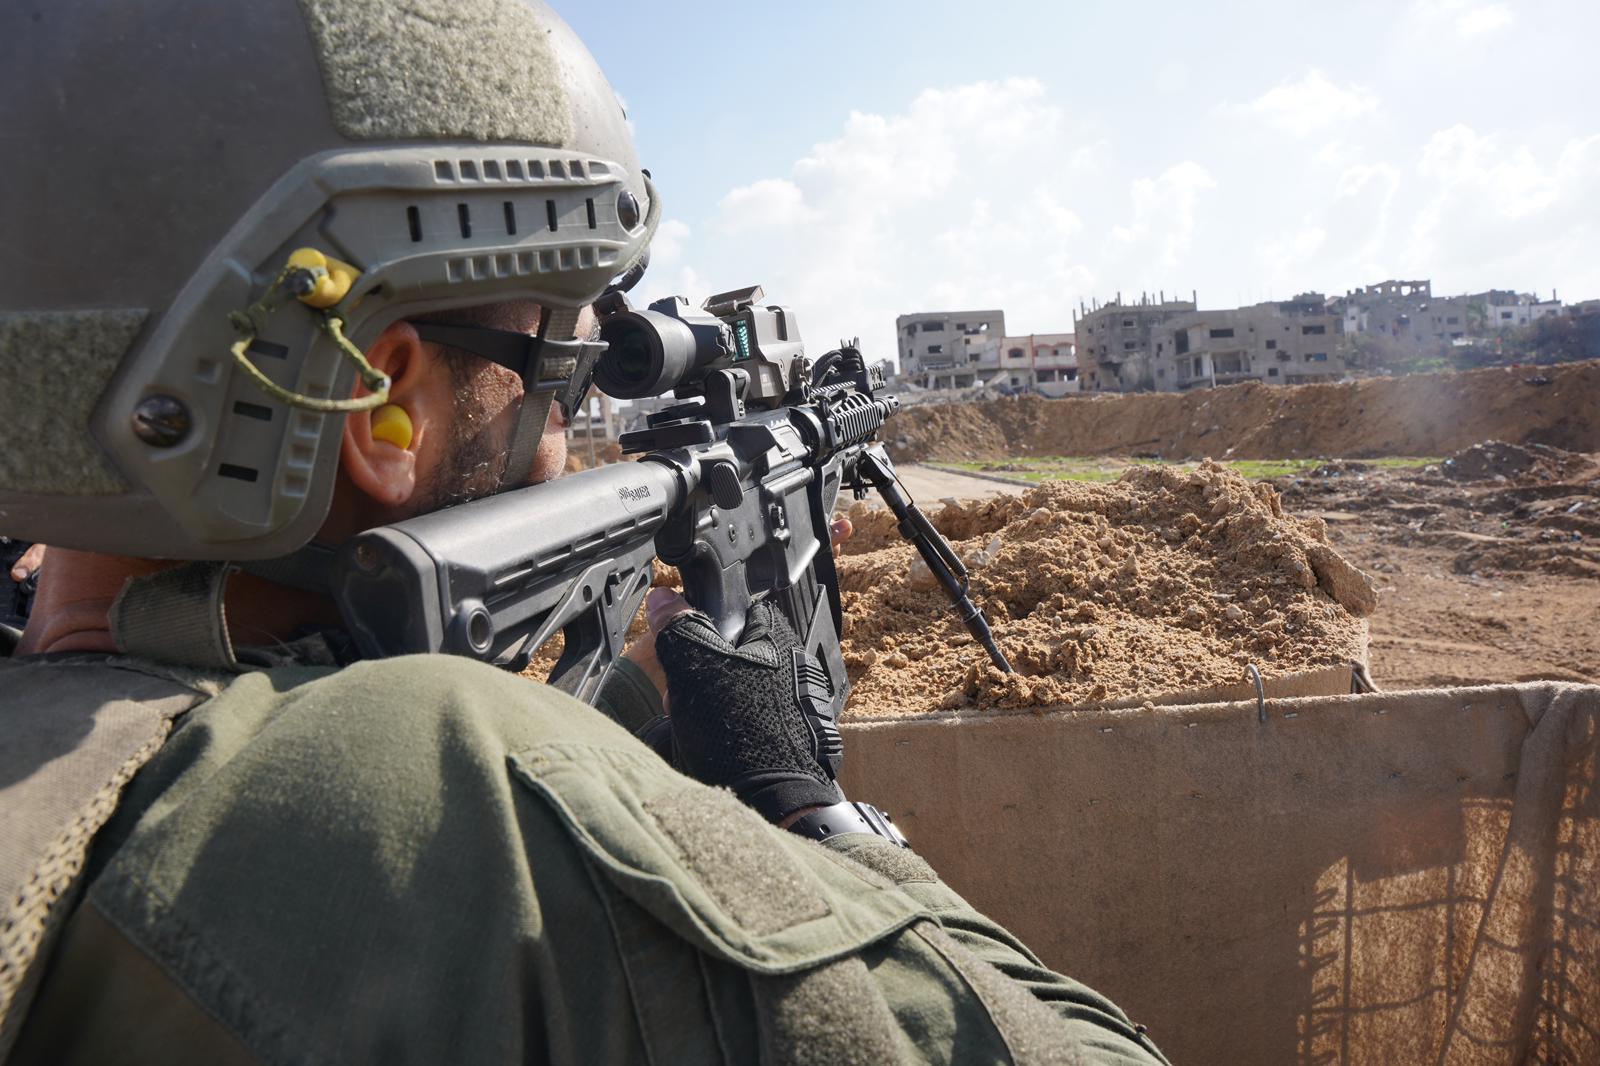 IDF soldier aiming rifle in Gaza IDF photo